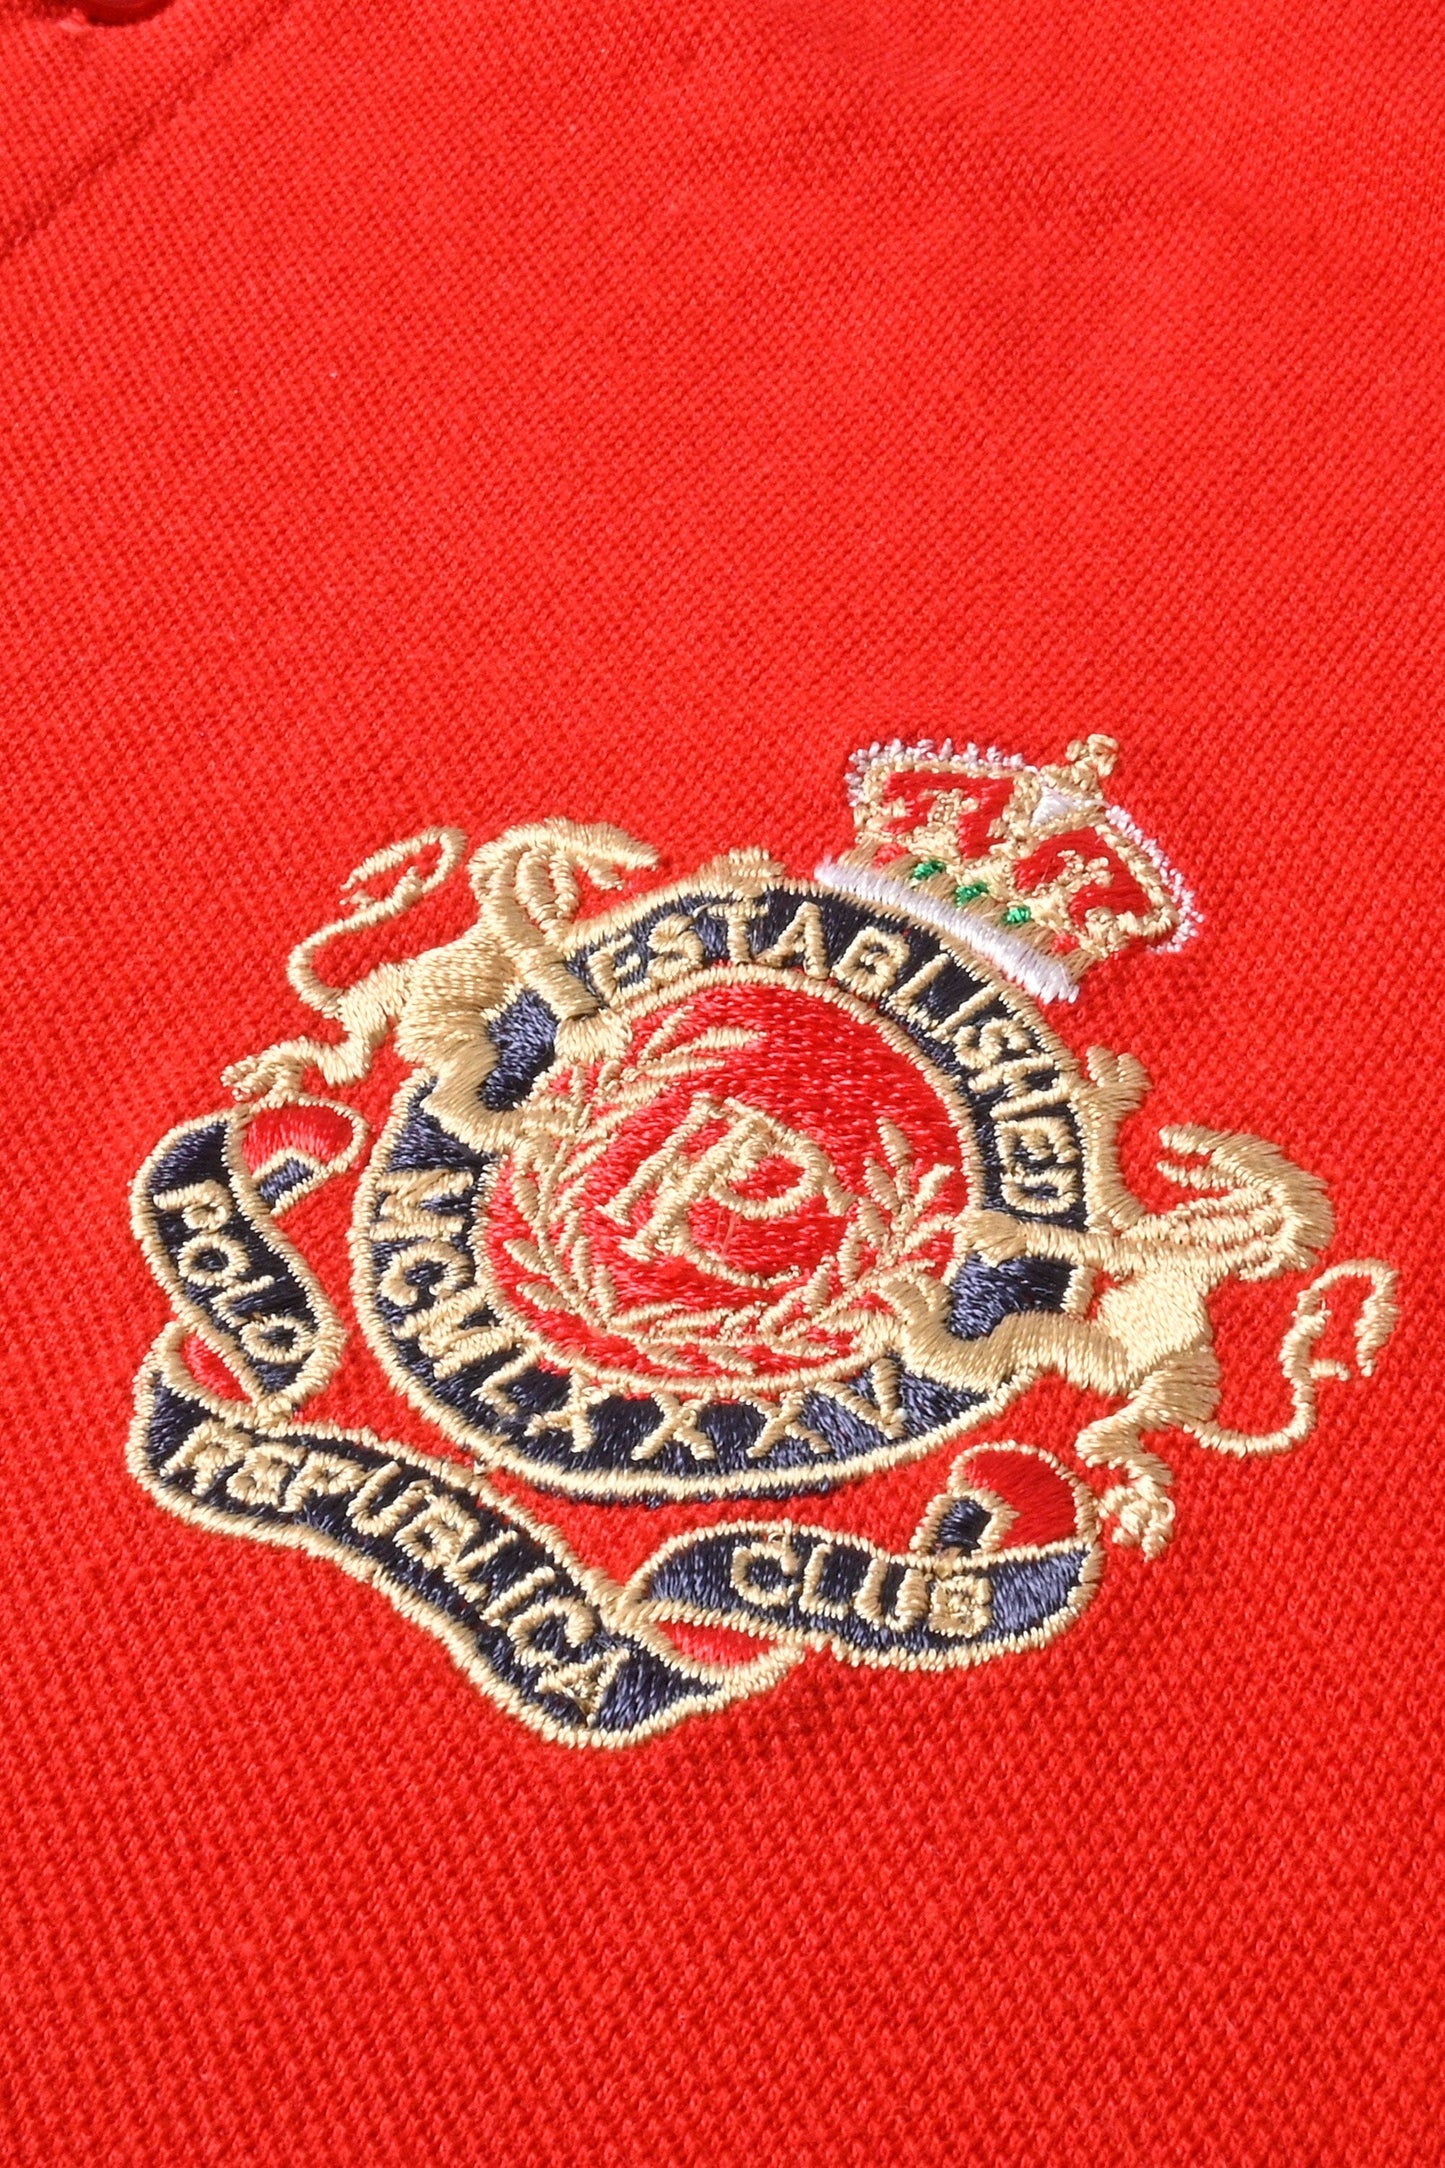 Polo Republica Men's Crest Embroidered Pique Casual Shirt Men's Casual Shirt Polo Republica 